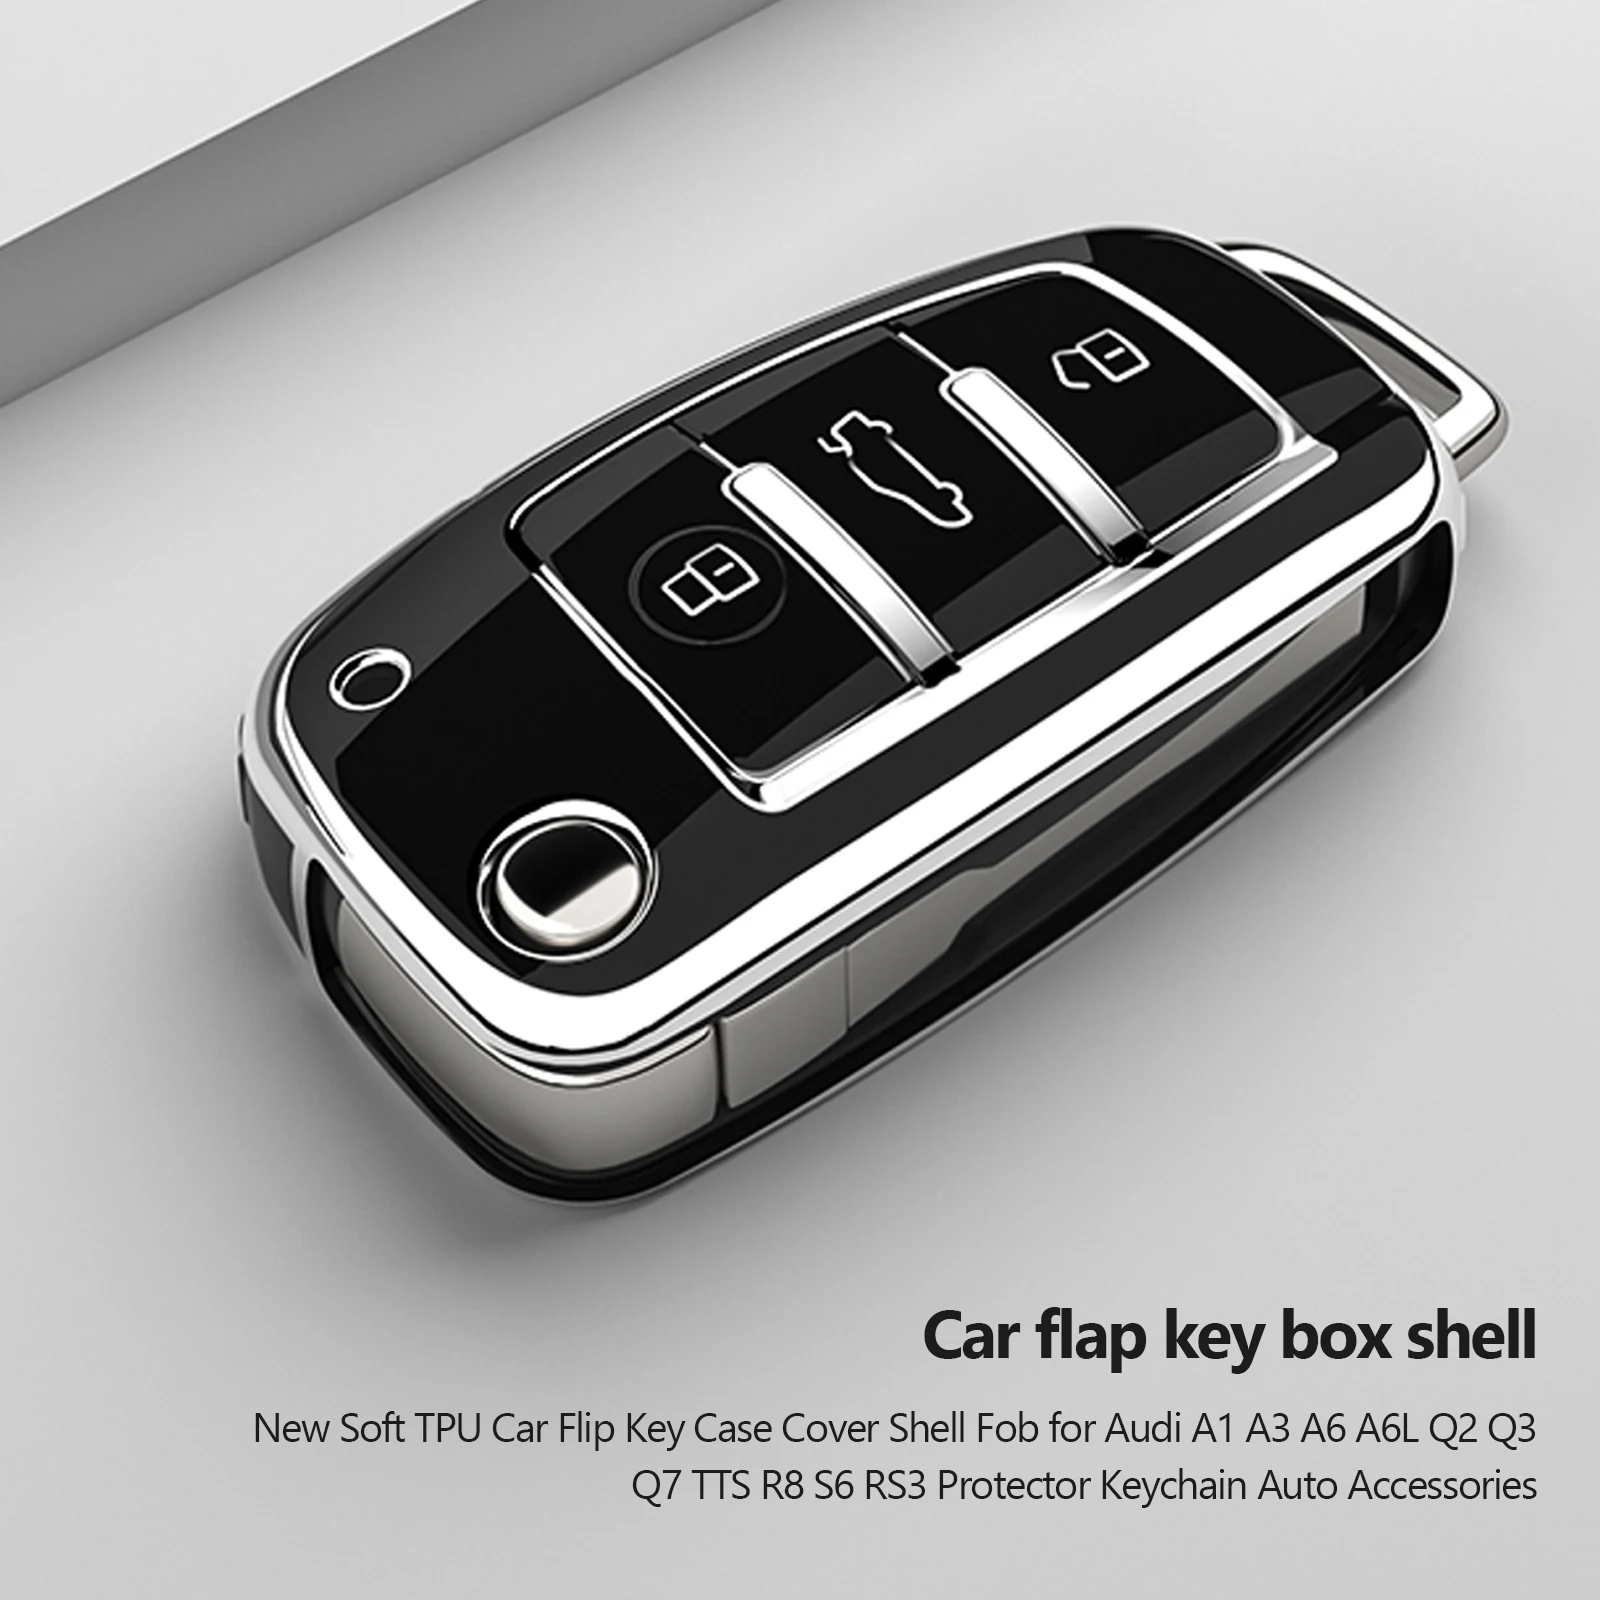 

New Soft TPU Car Flip Key Case Cover Shell Fob For Audi A1 A3 A6 A6L Q2 Q3 Q7 TTS R8 S6 RS3 Protector Keychain Auto Accessories